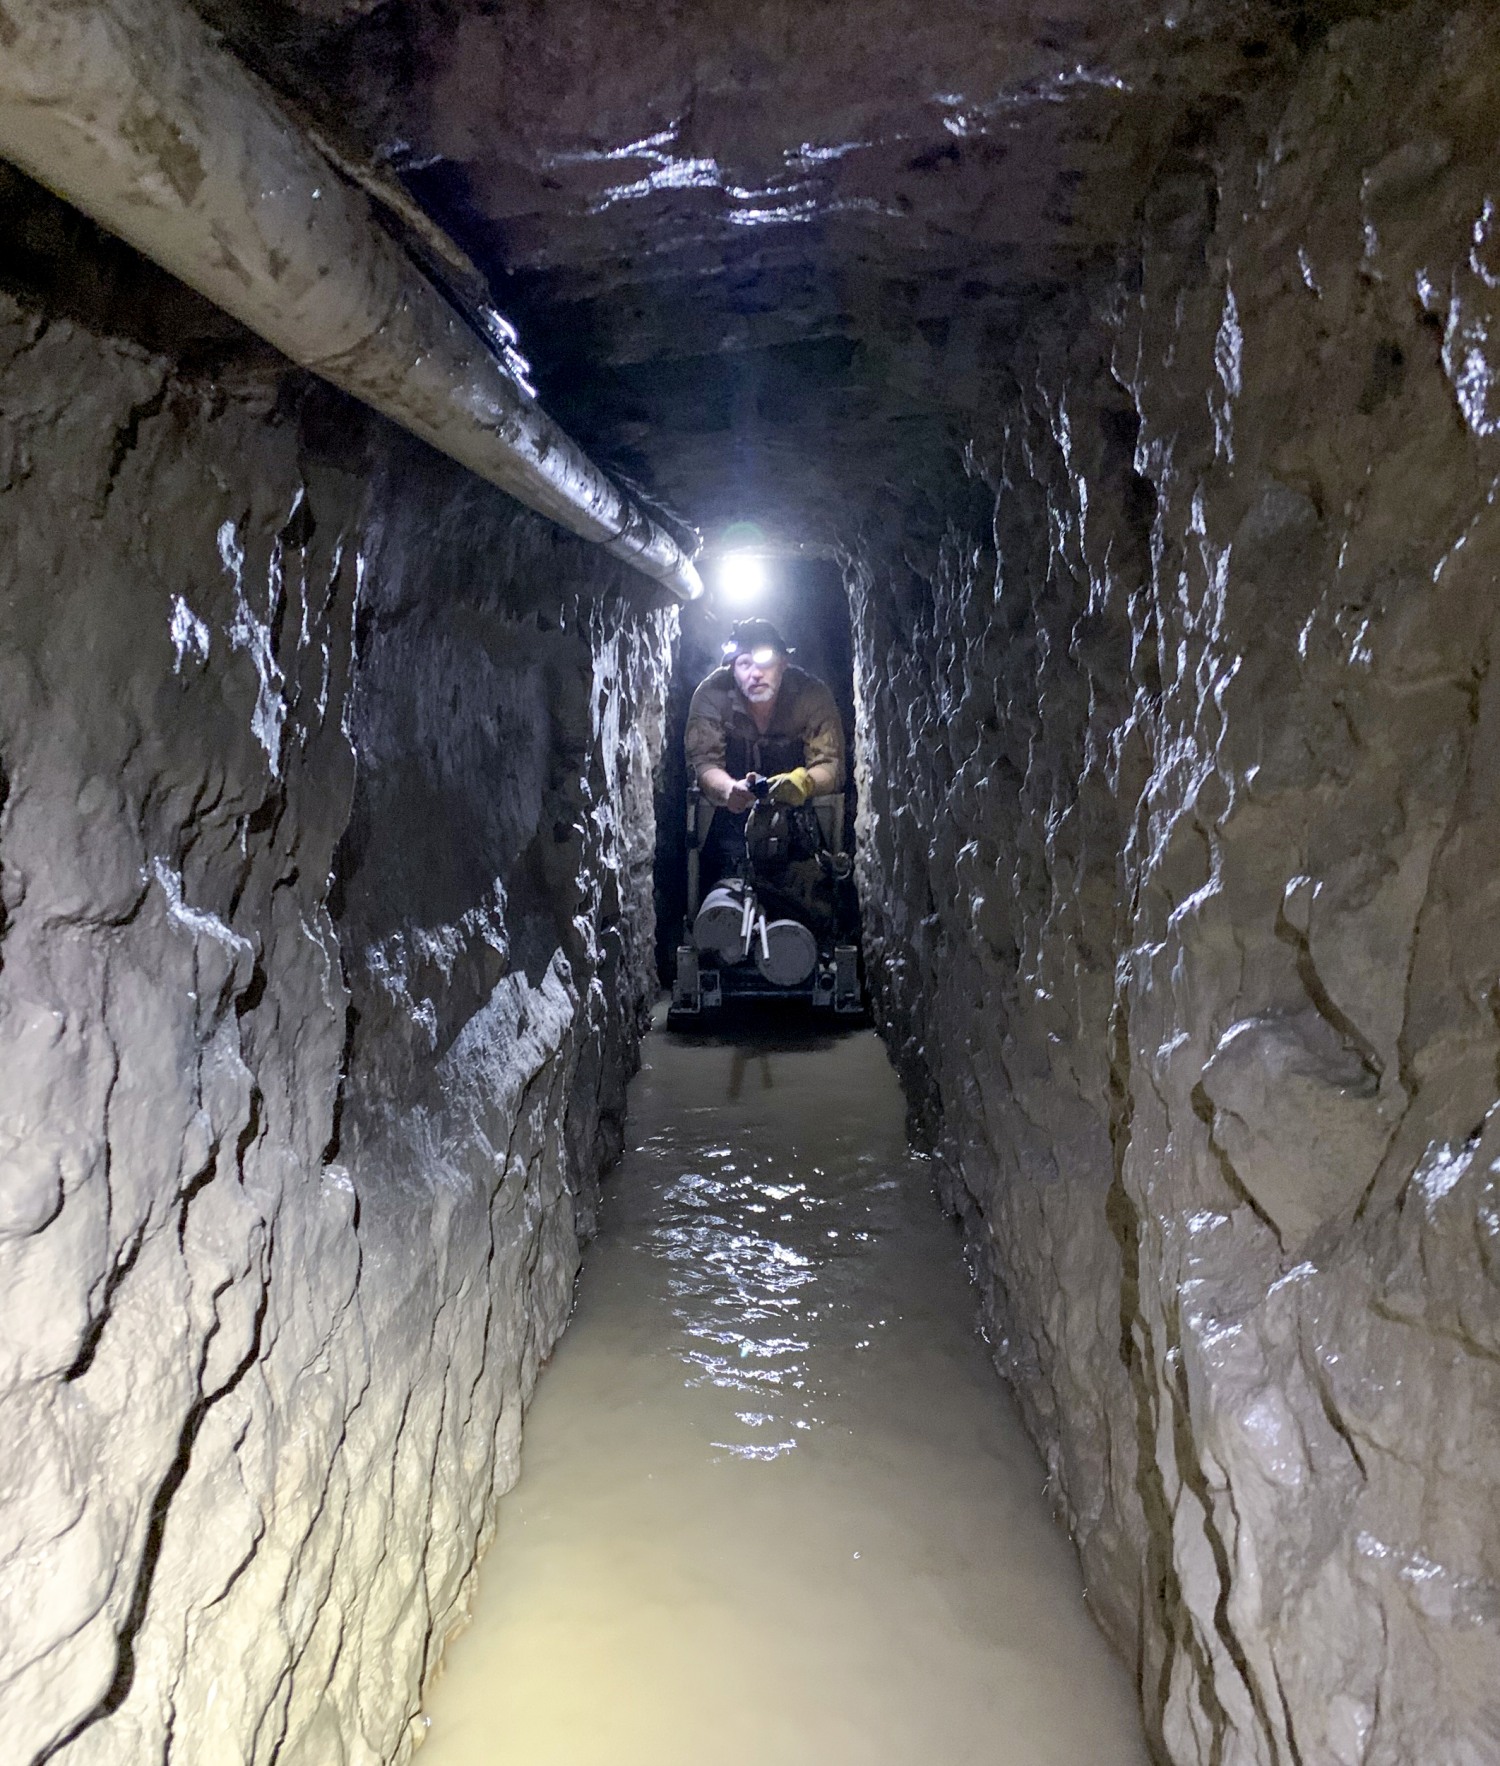 Longest-ever smuggling tunnel found on Southwest border